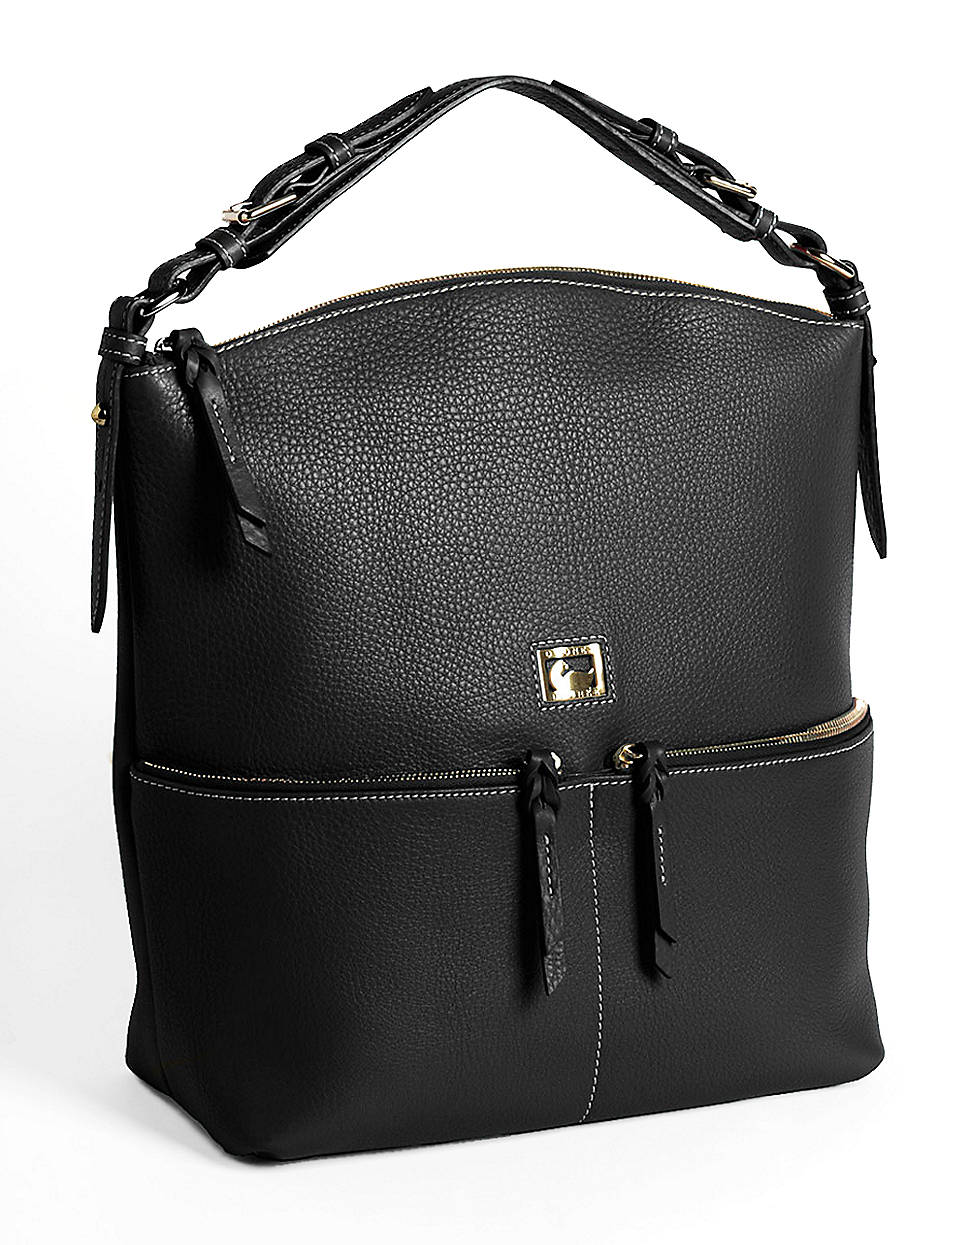 Dooney & Bourke Leather Medium Zipper Pocket Sac Bag in Black | Lyst